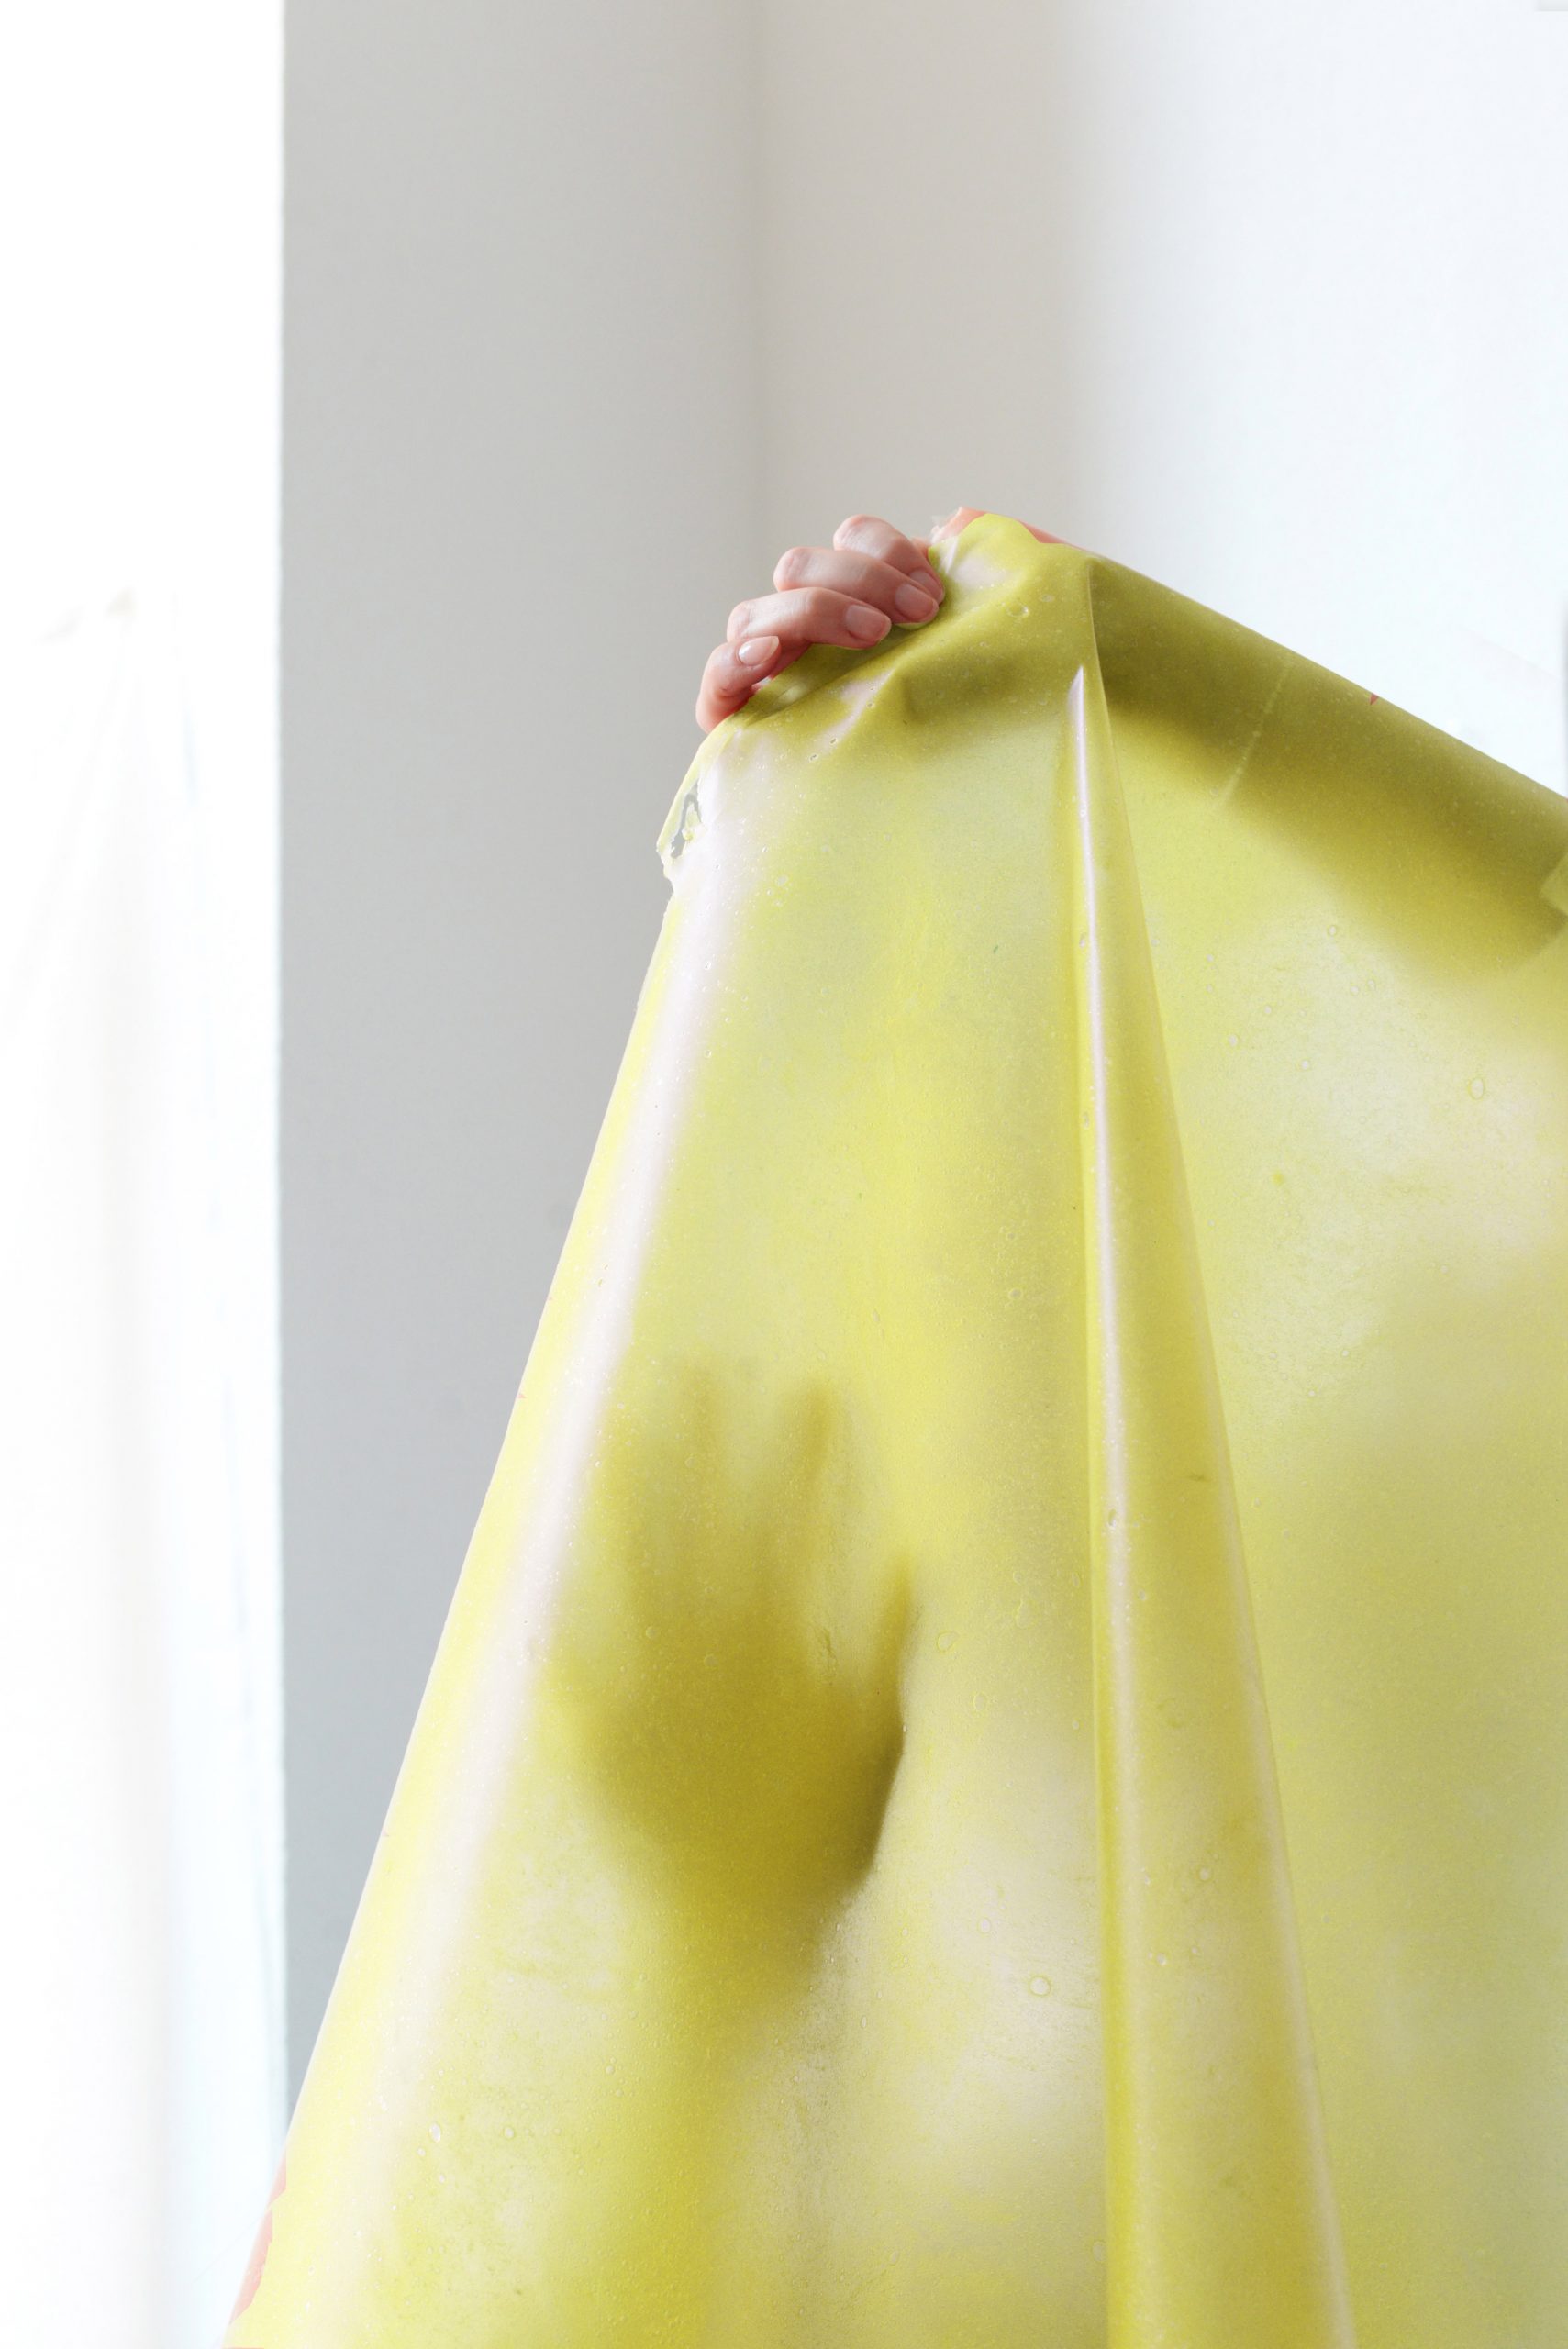 Yellow fruit leather developed by Lobke Beckfeld and Johanna Hehemeyer-Cürten